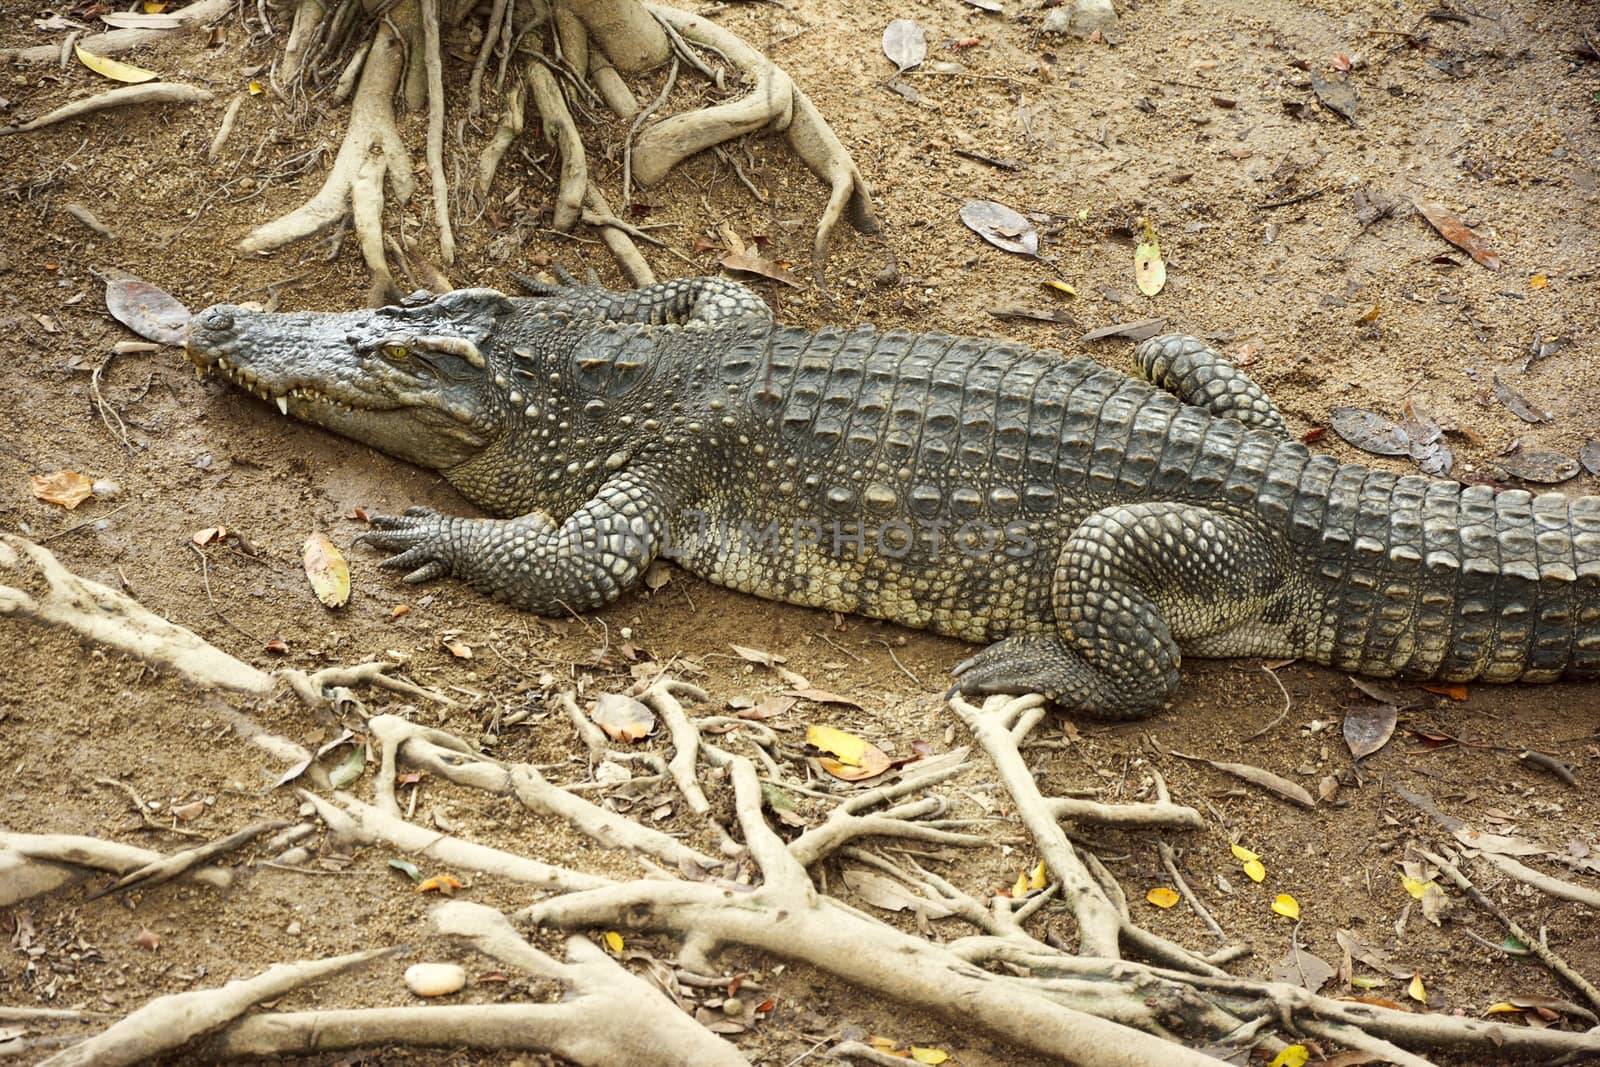 Sleeping crocodiles on crocodile farm, Thailand by think4photop